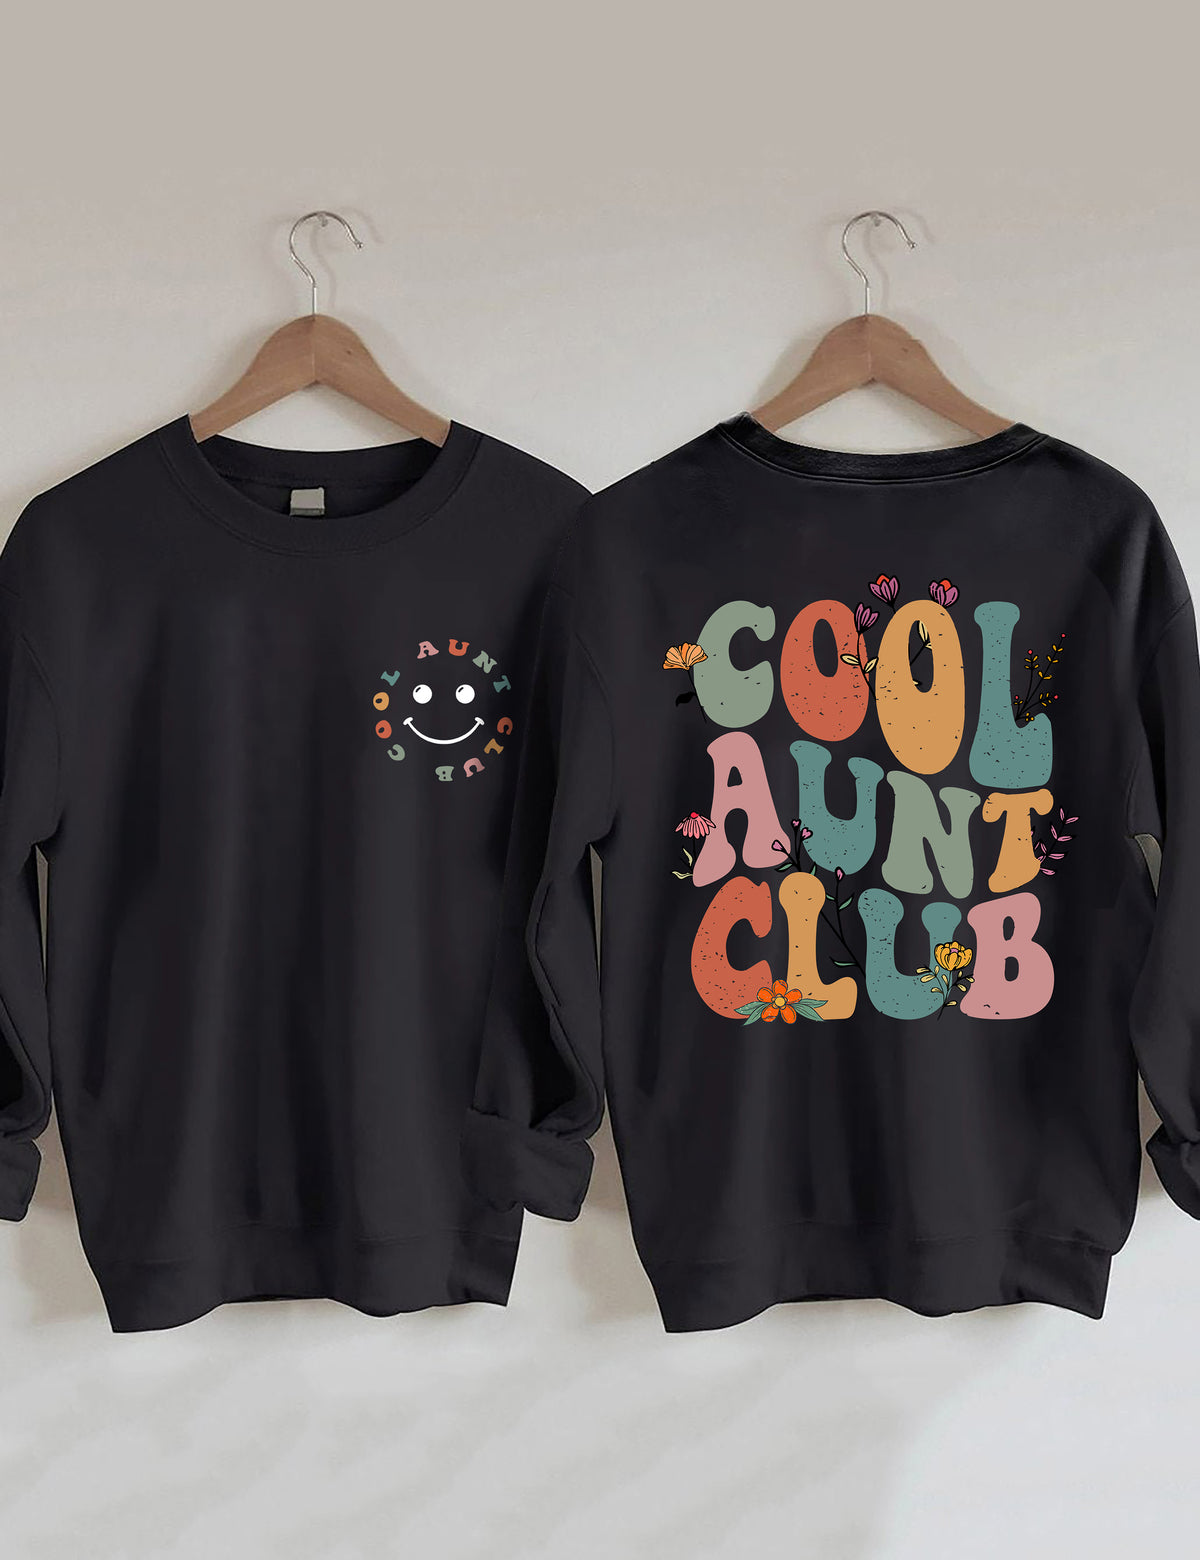 Cooles Aunts Club Sweatshirt 